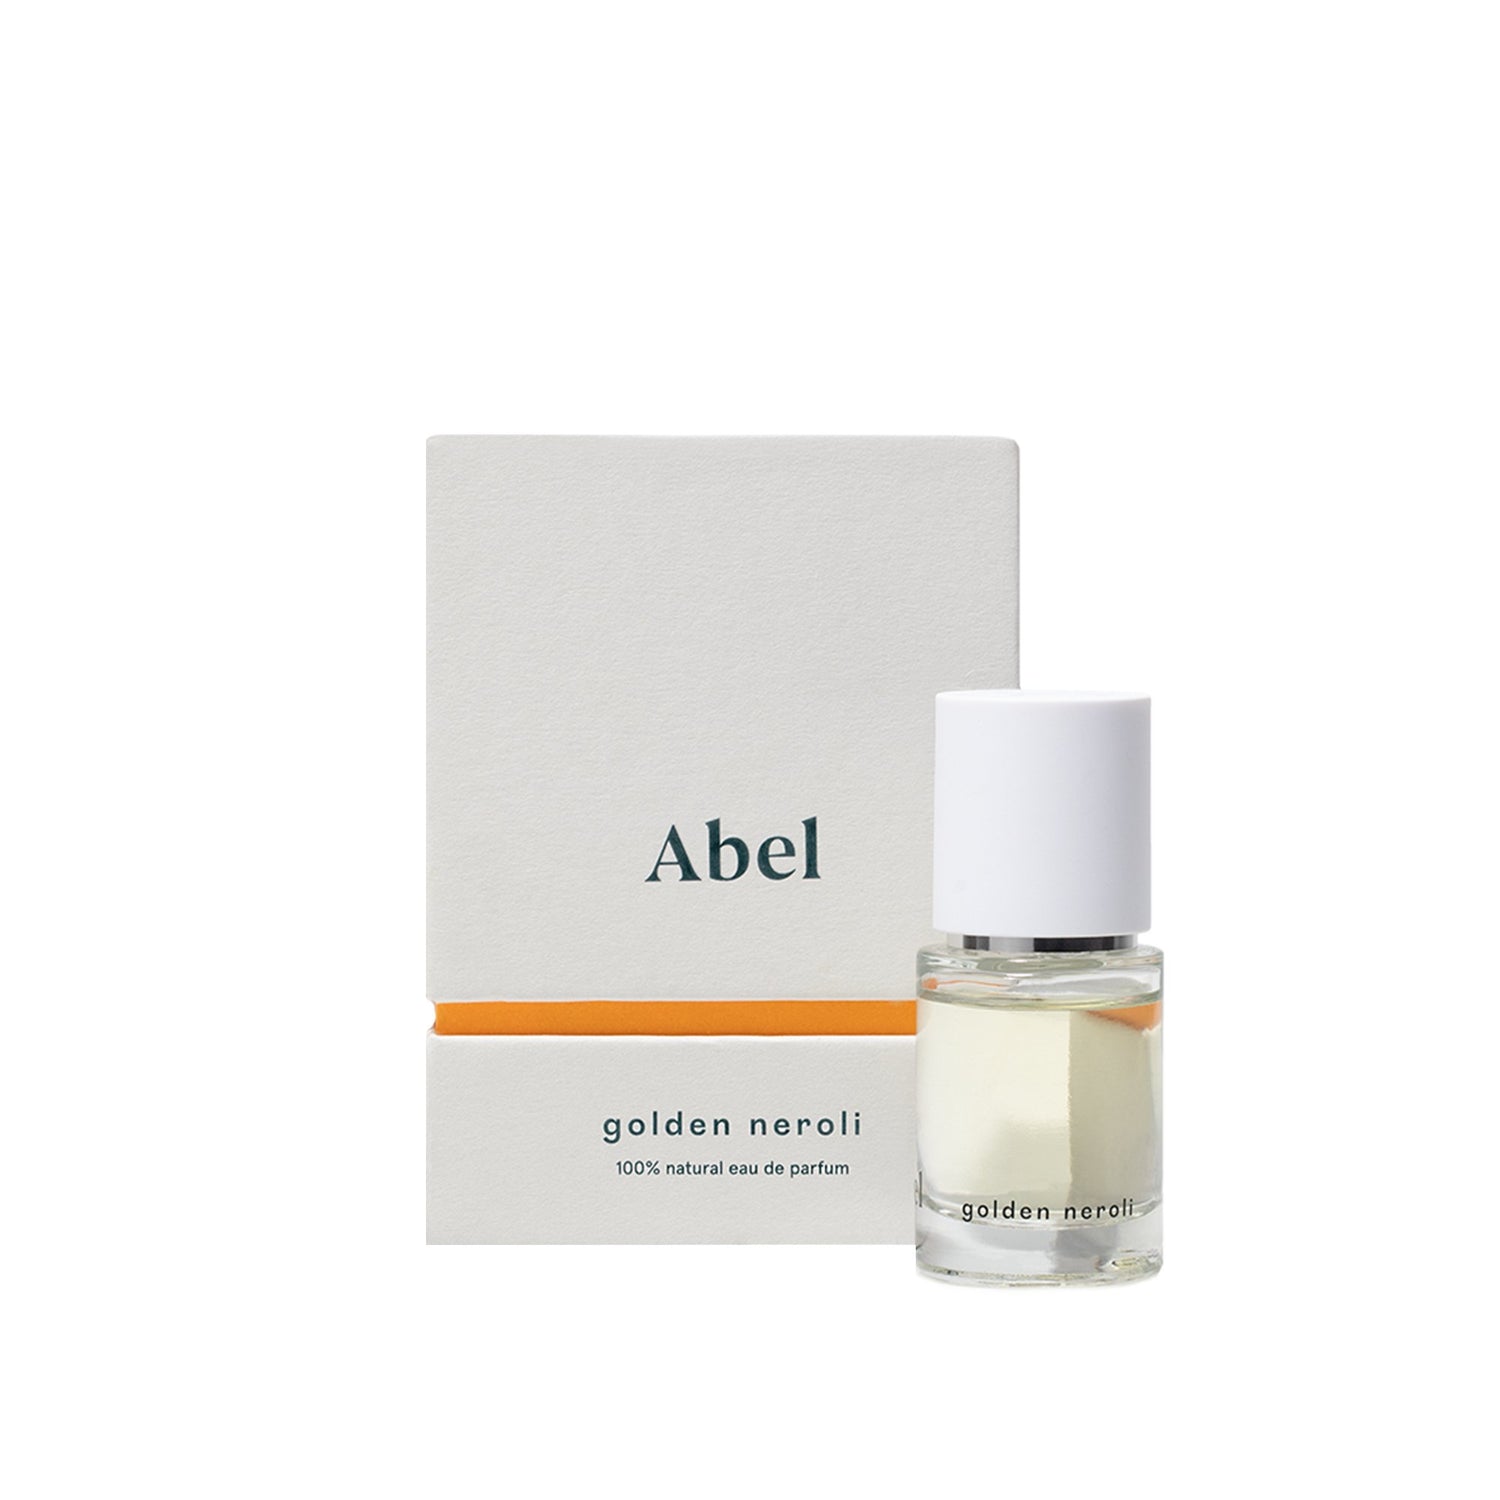 Abel - Golden Neroli Eau de Parfum - The Flower Crate